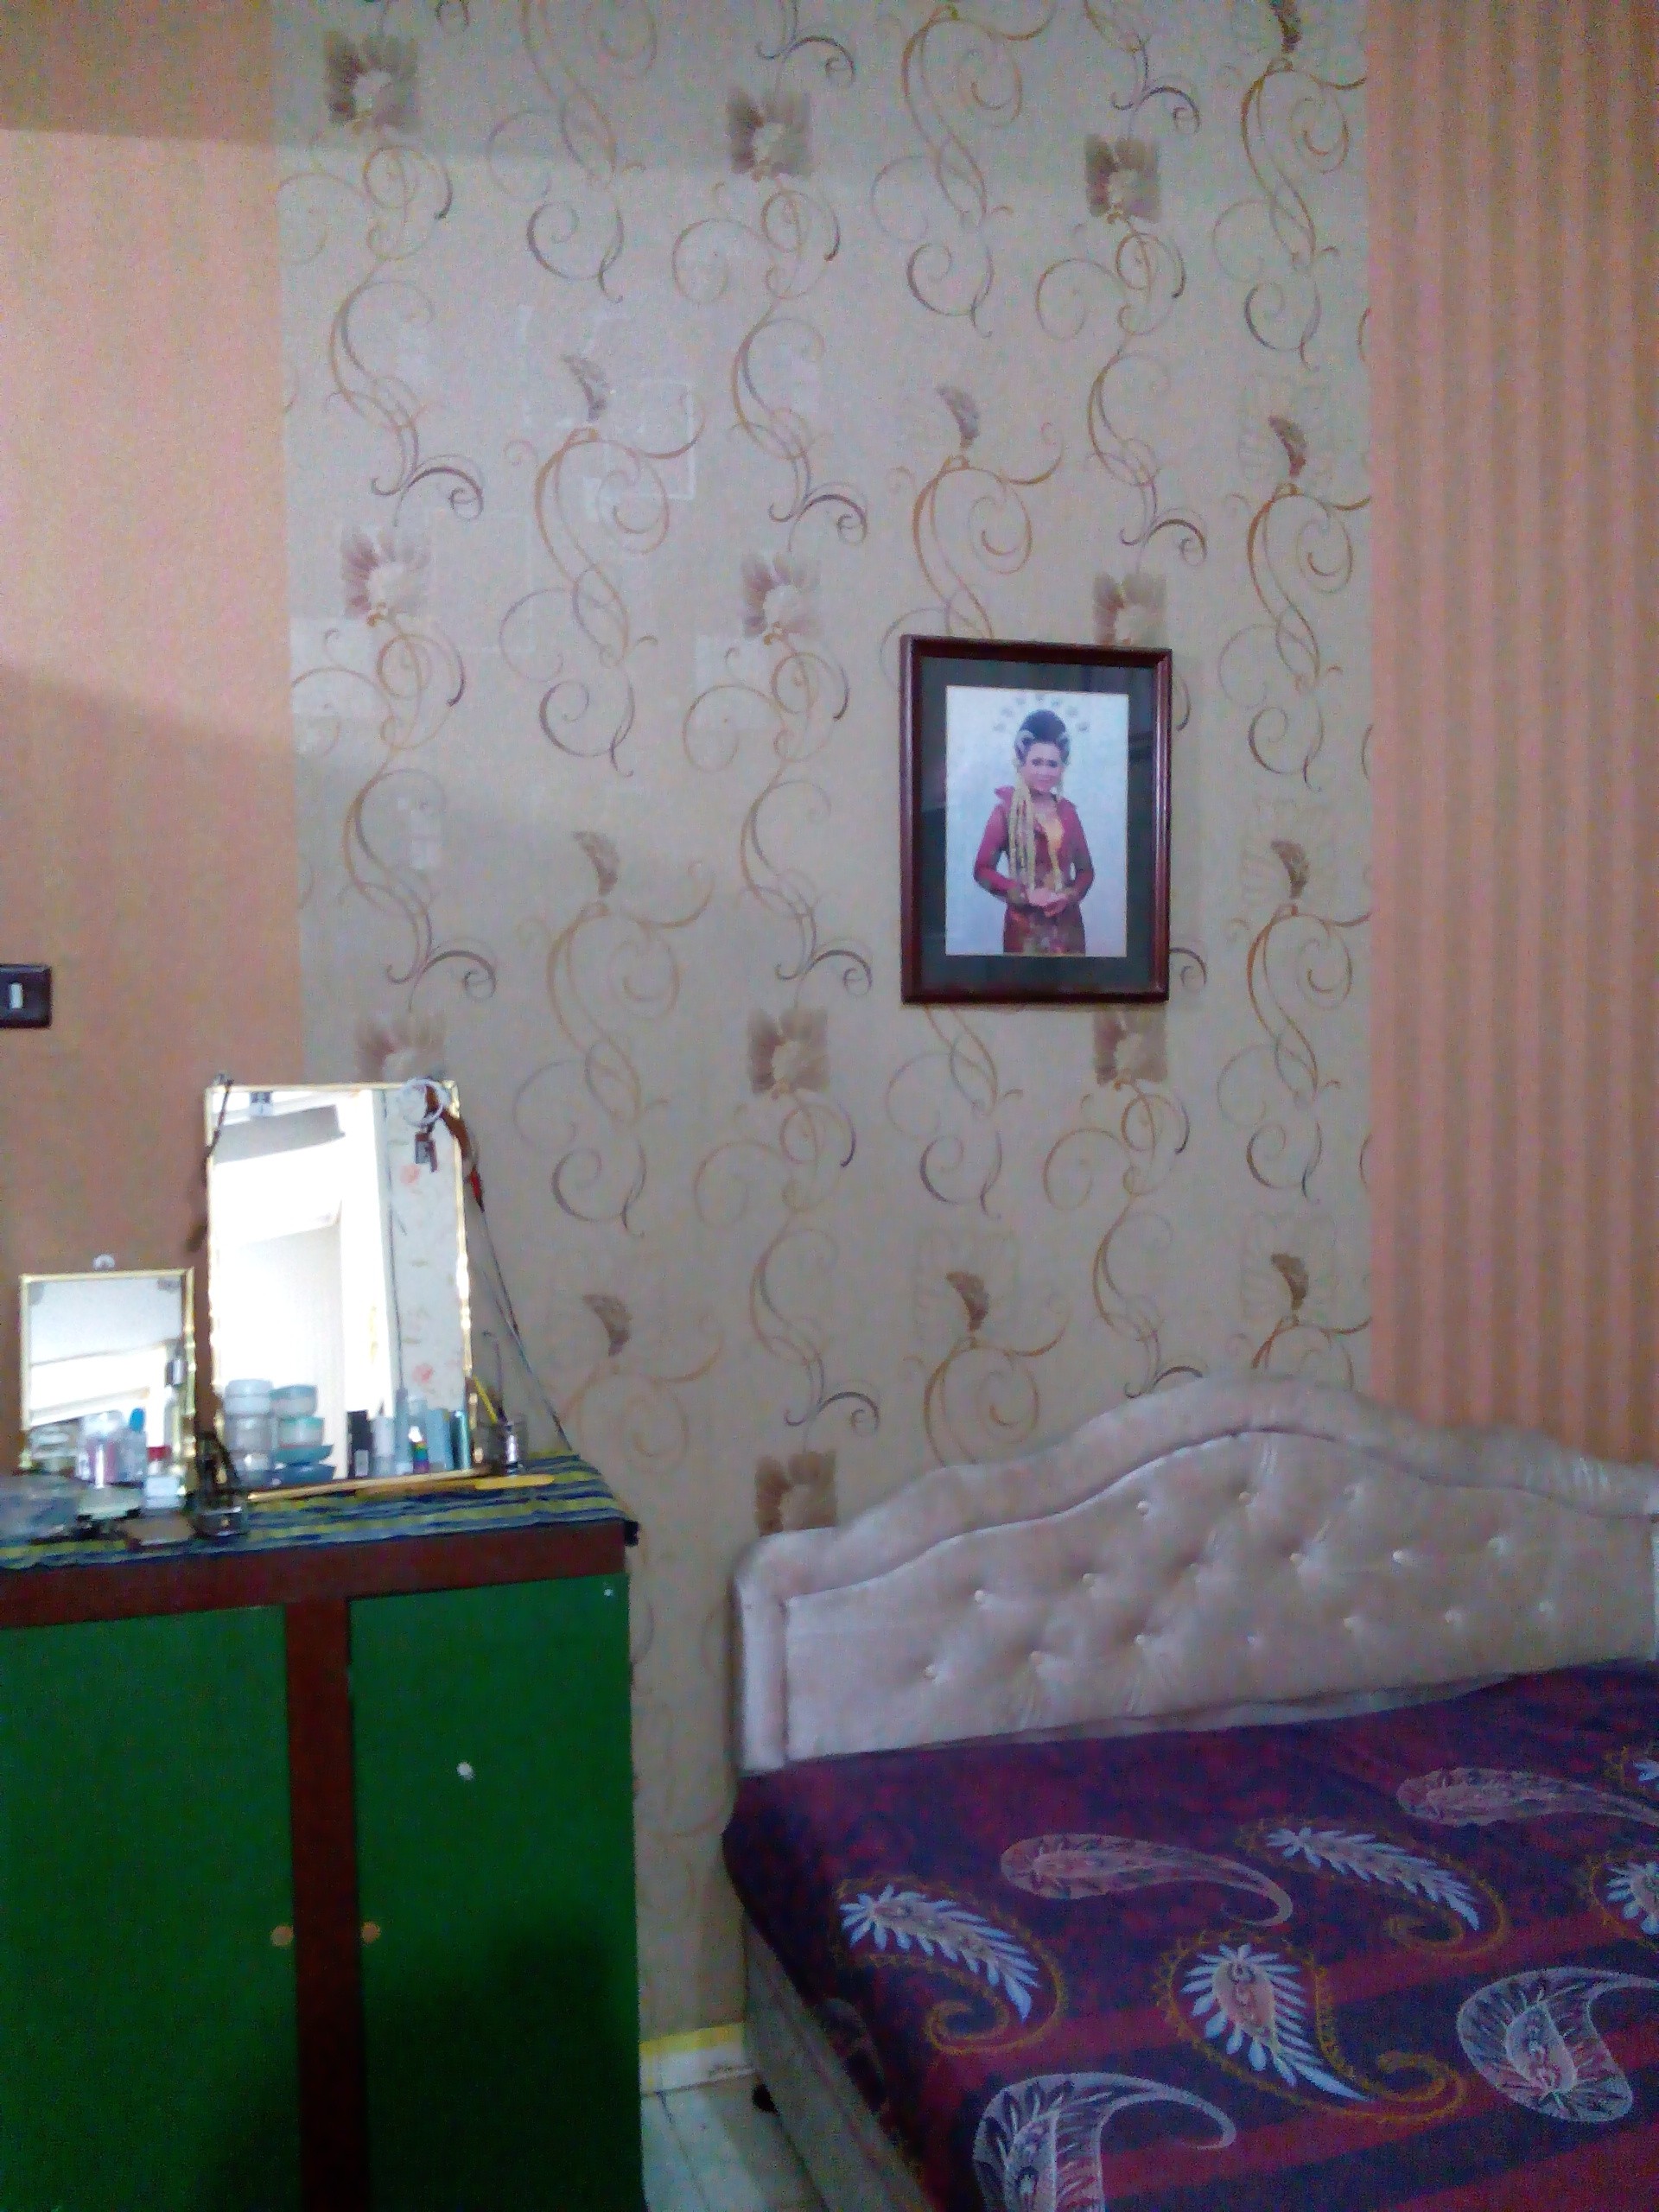 壁紙dinding kamar tidur romantis